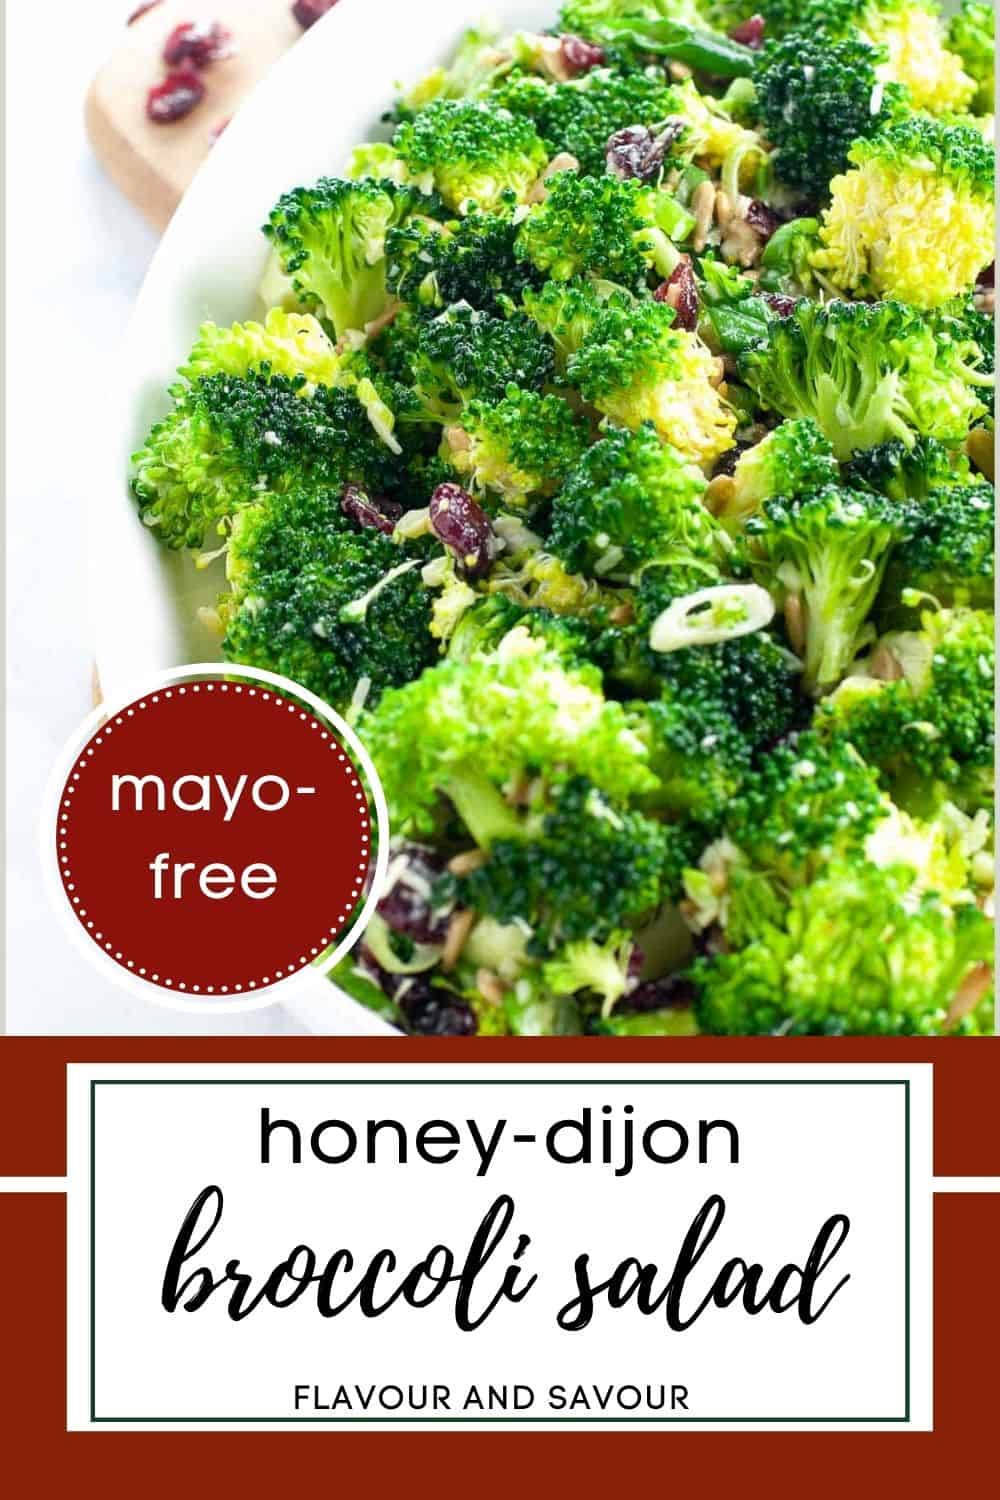 image with text for honey-dijon broccoli salad